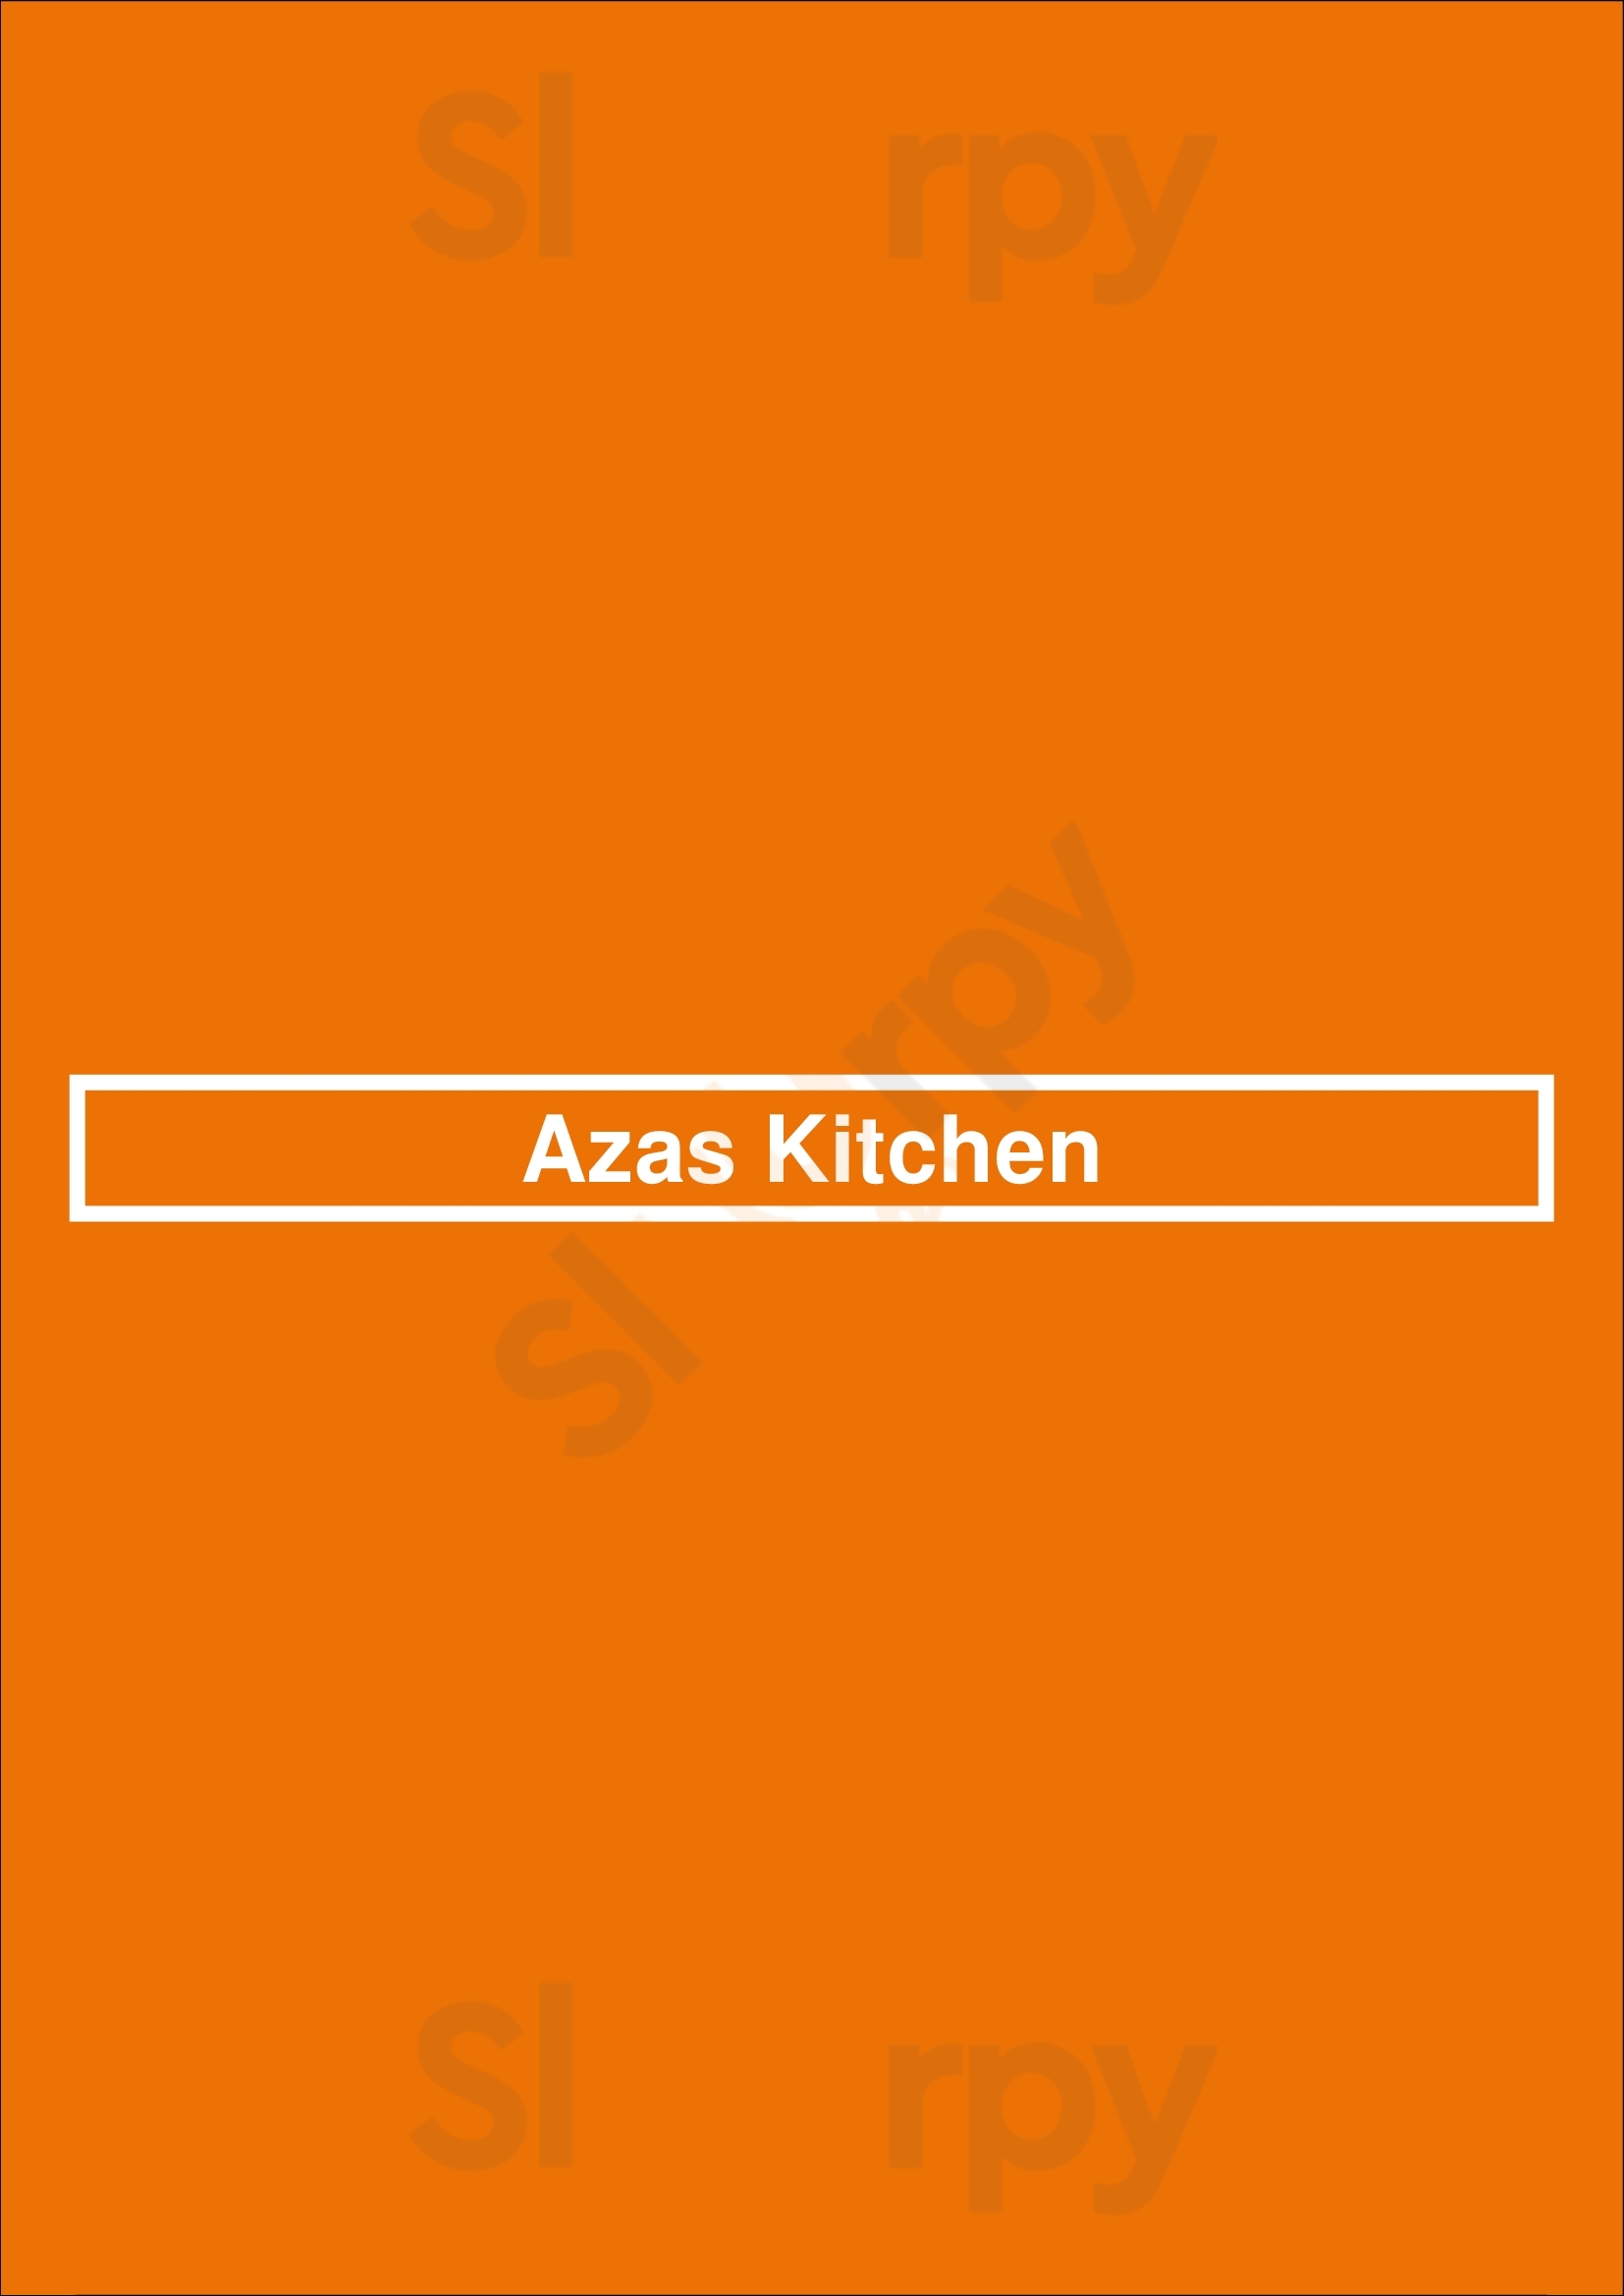 Azas Kitchen Edinburgh Menu - 1